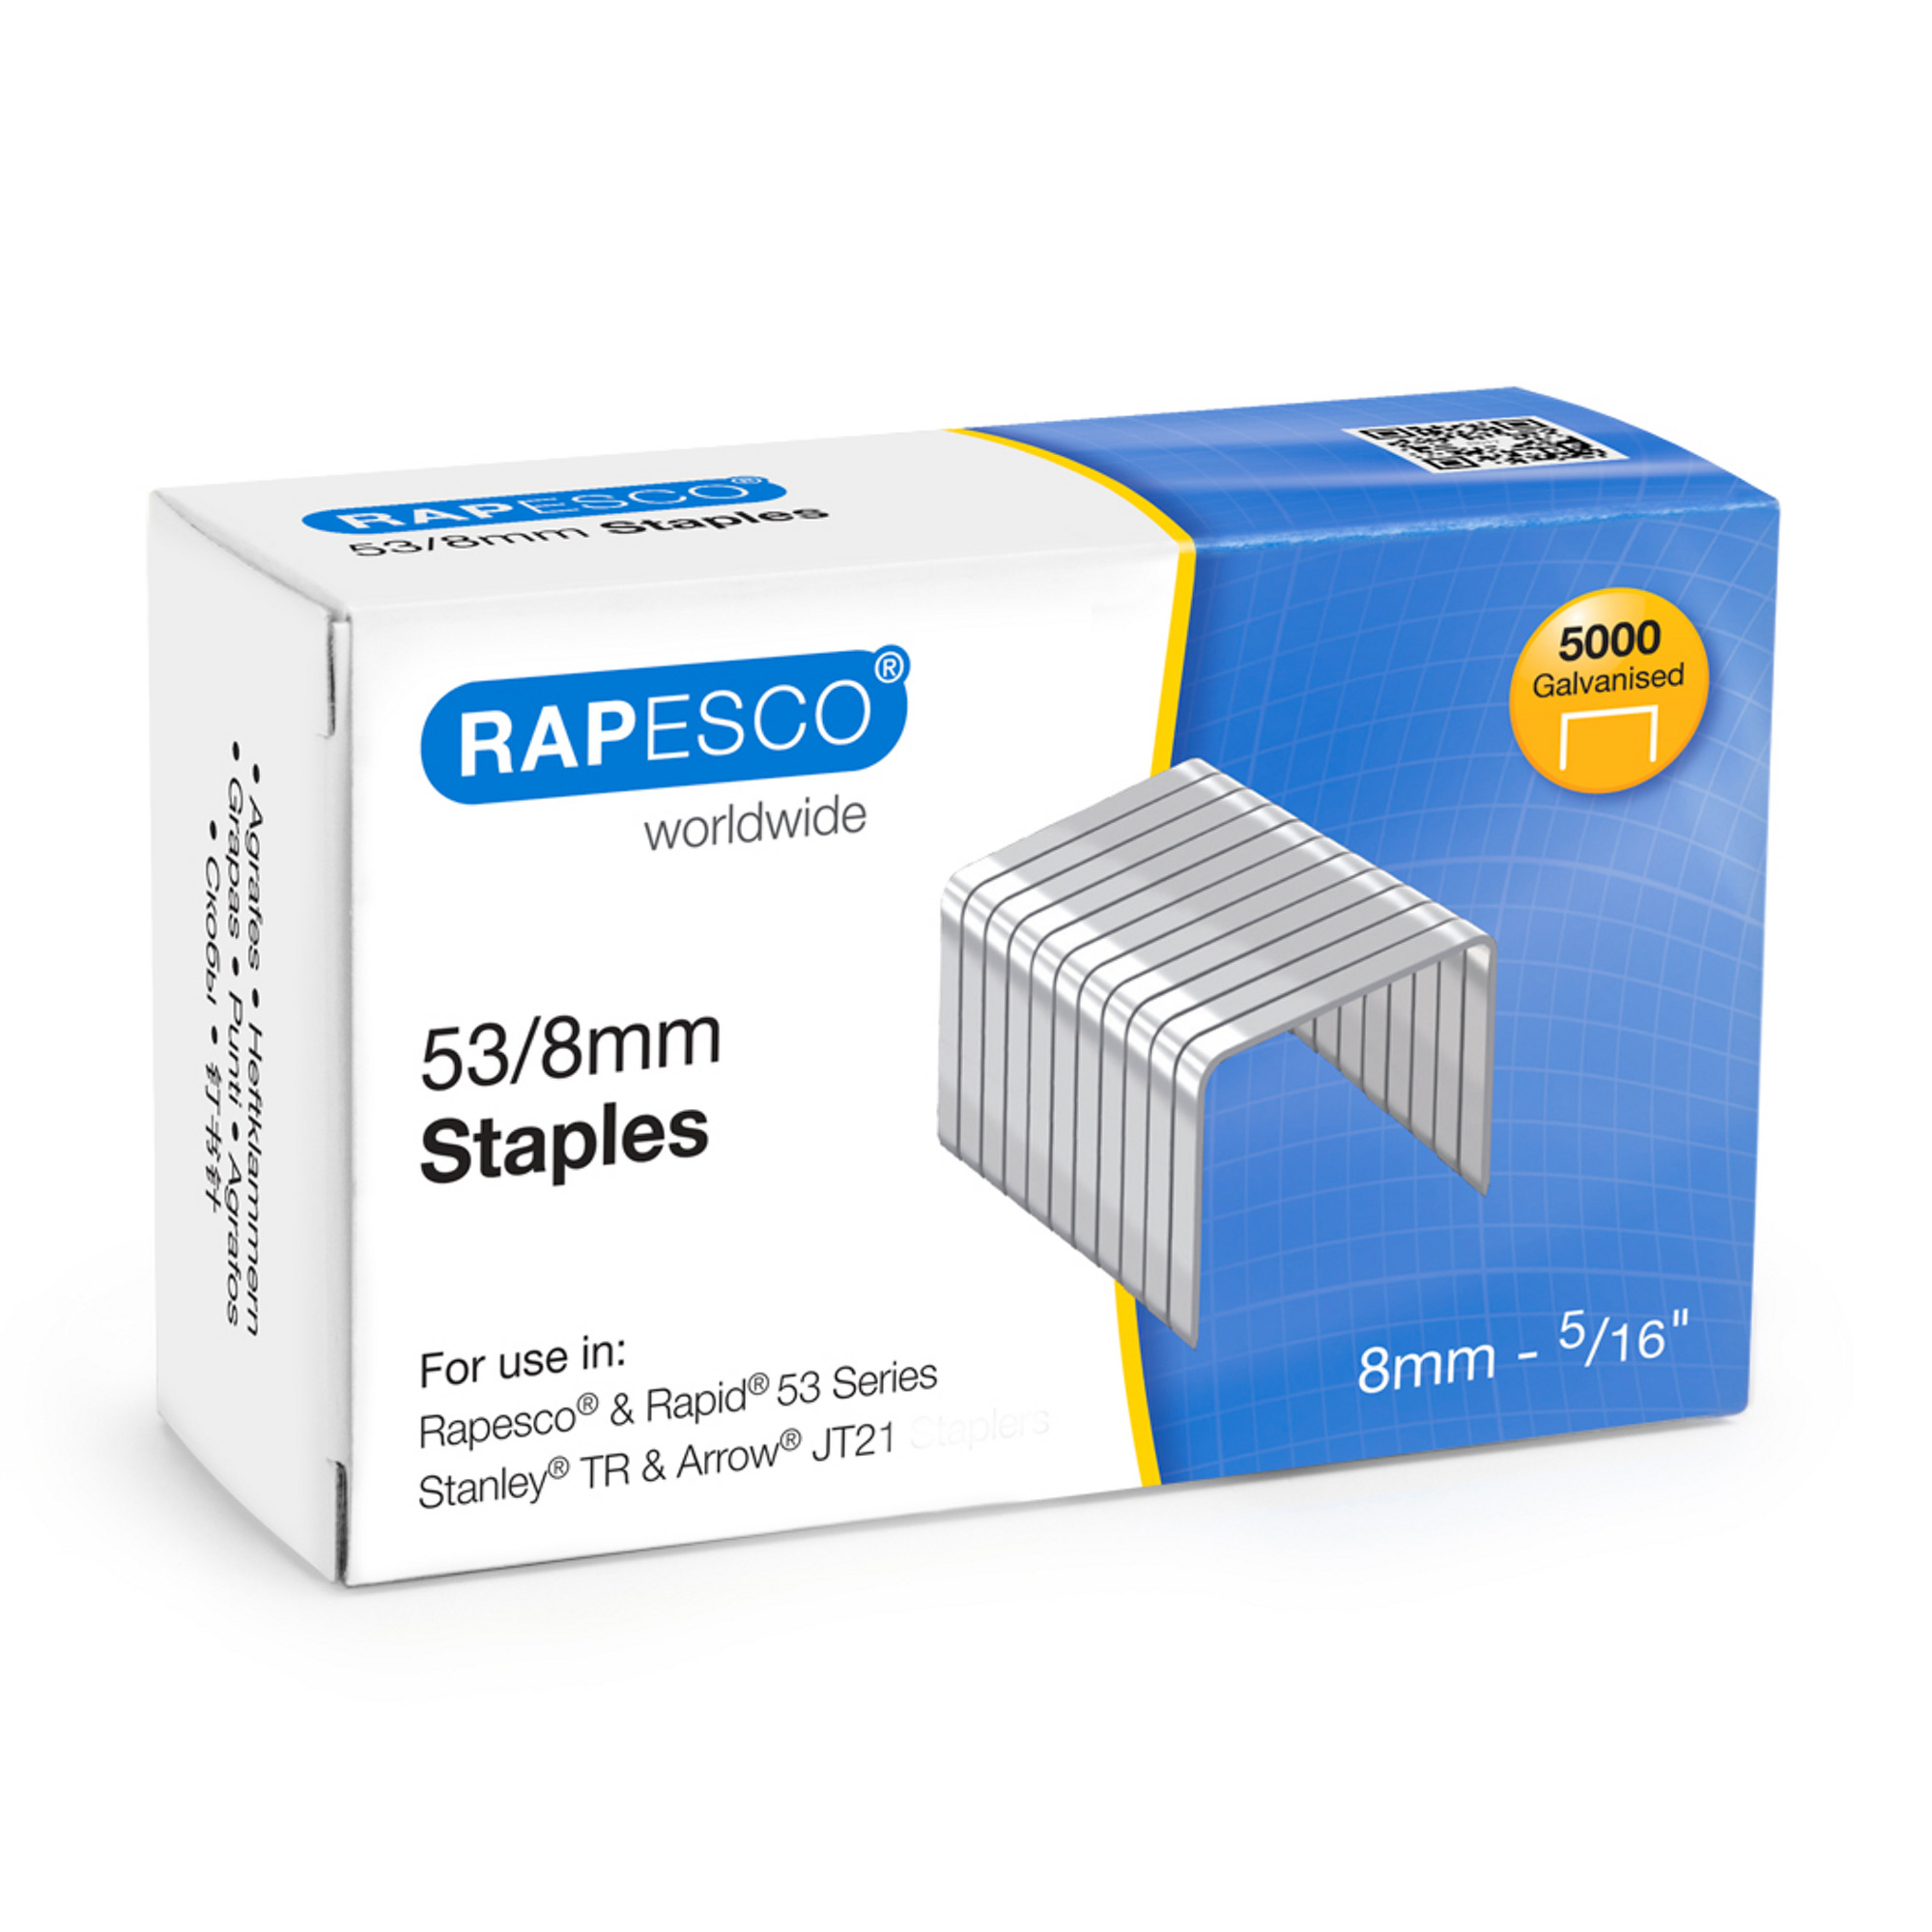 Rapesco 53/8 Staples P5000